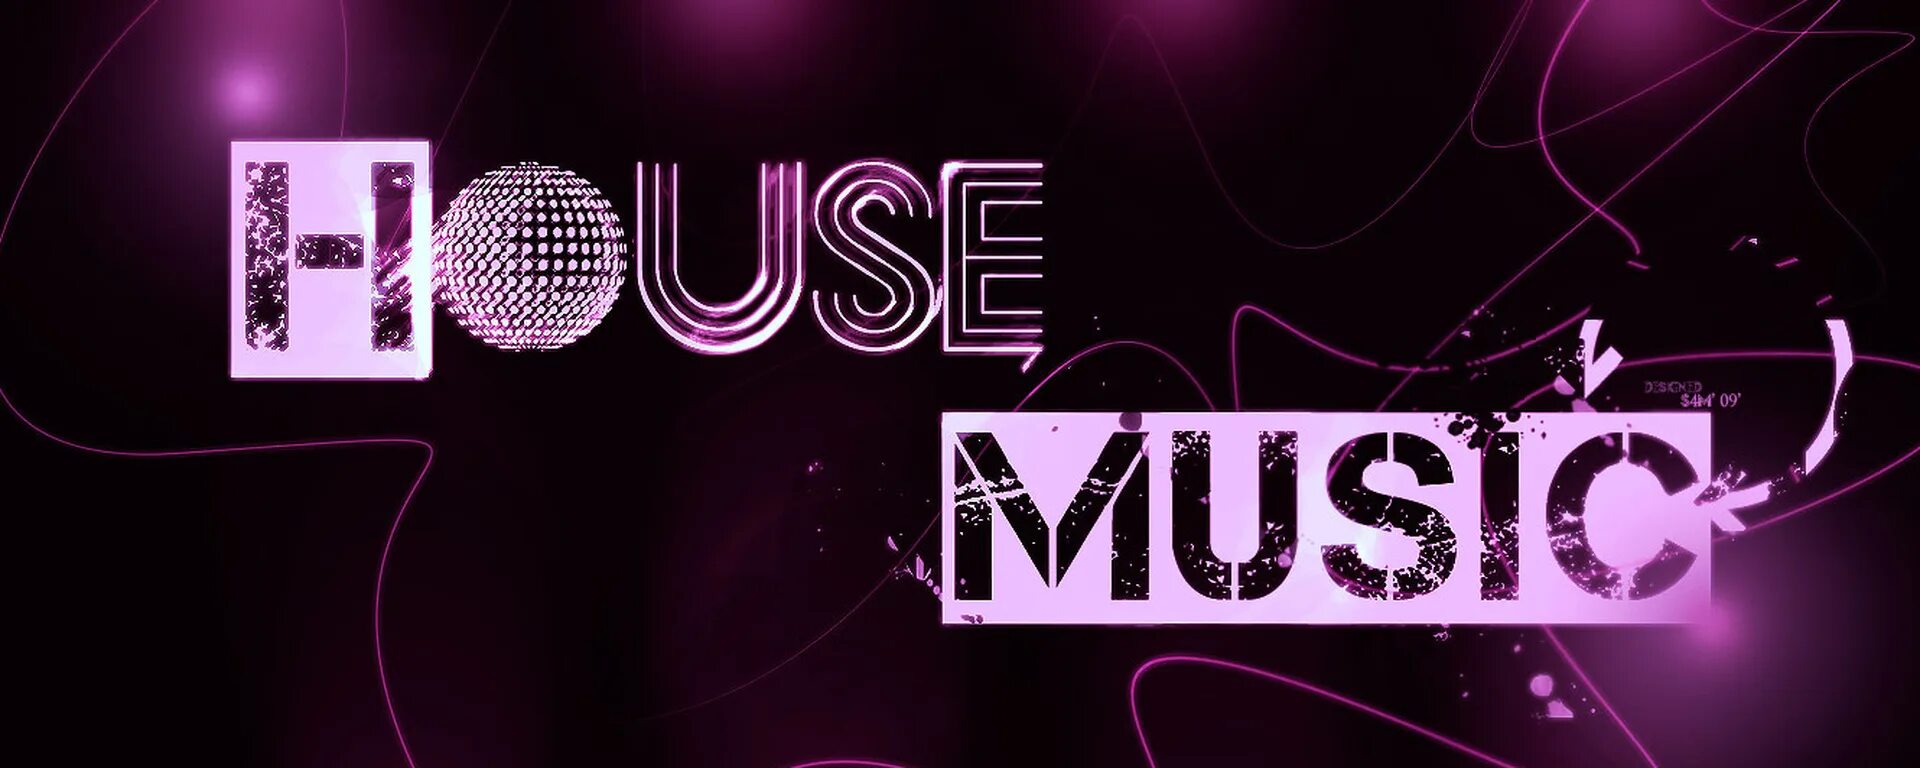 Хаус Мьюзик. House Music картинки. Хаус стиль музыки. House Music обложка. Слушать house music